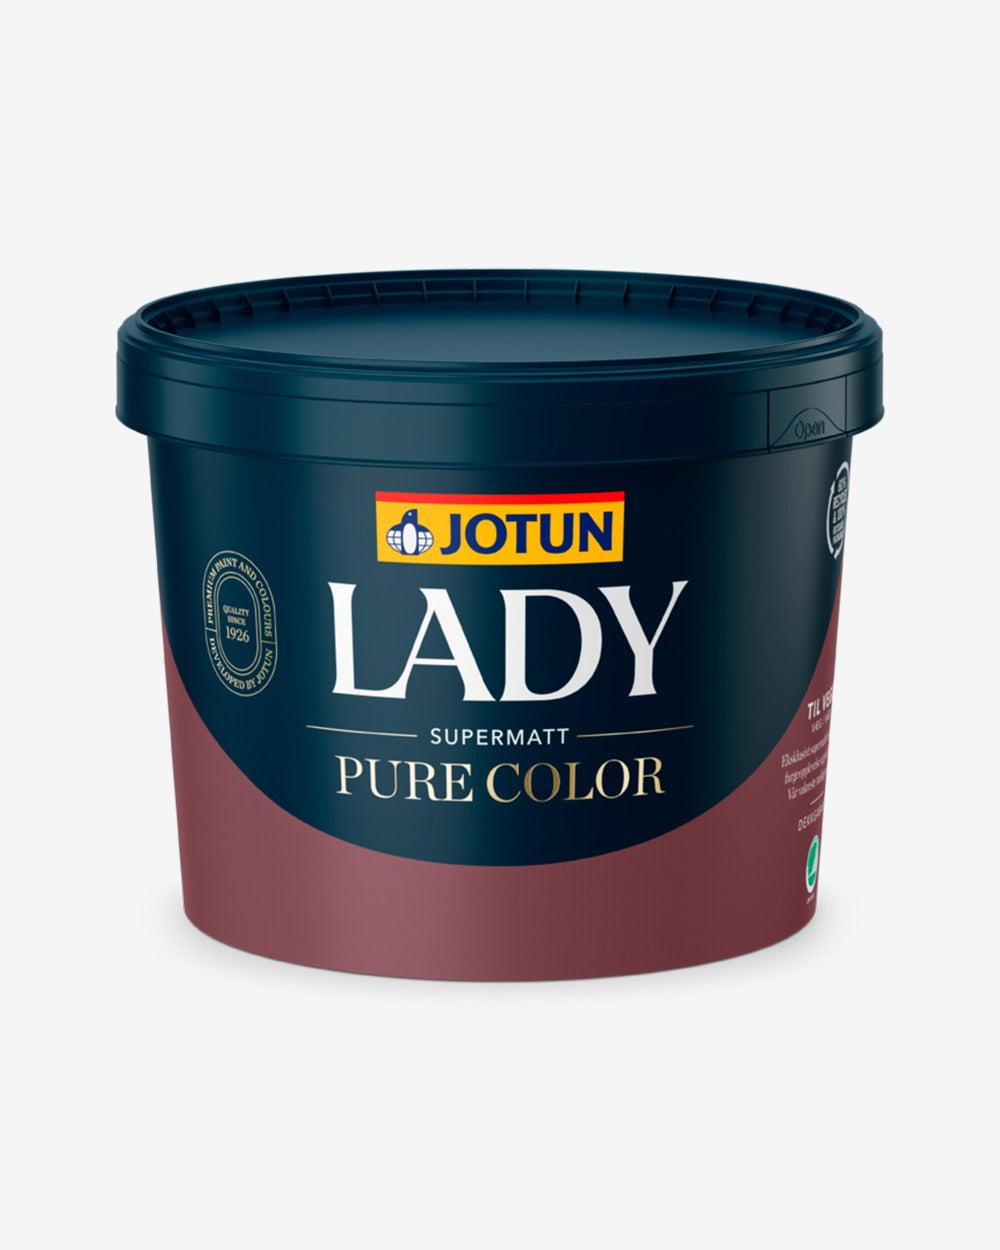 Jotun Lady Pure Color || Helmat vægmaling